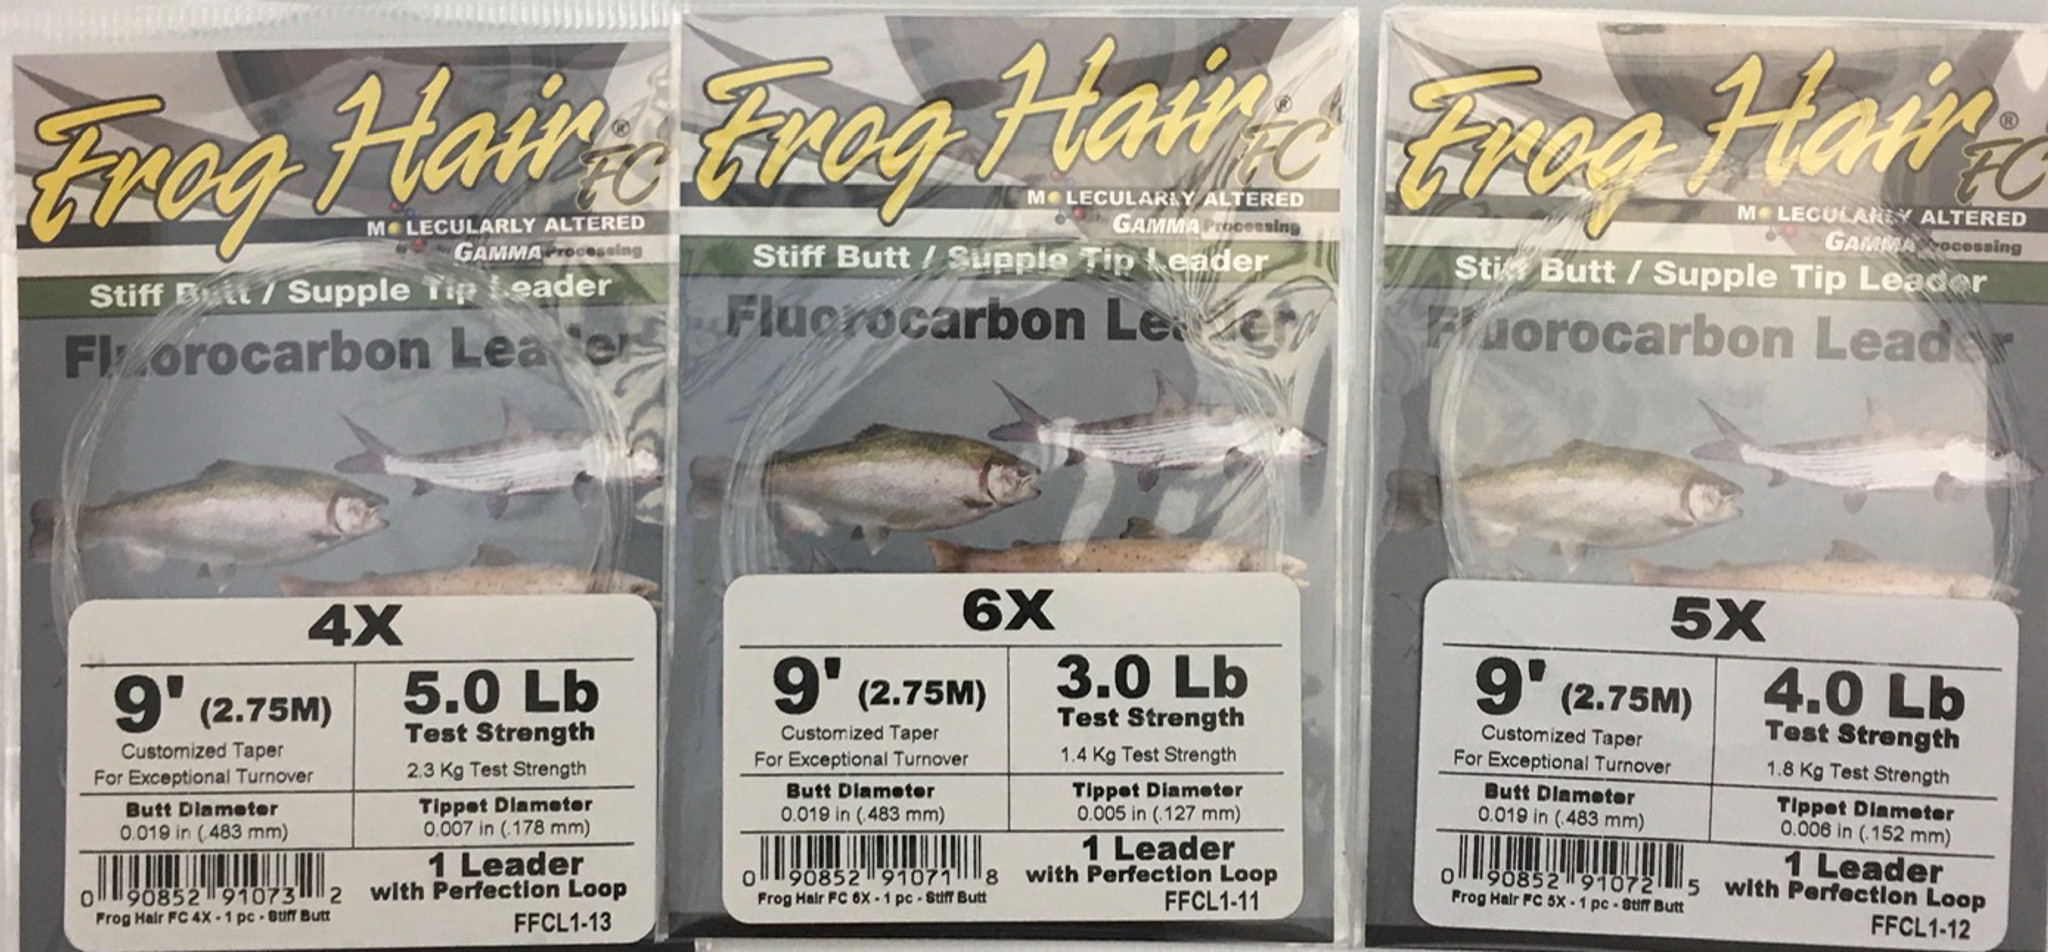 Frog Hair Fluorocarbon Leaders